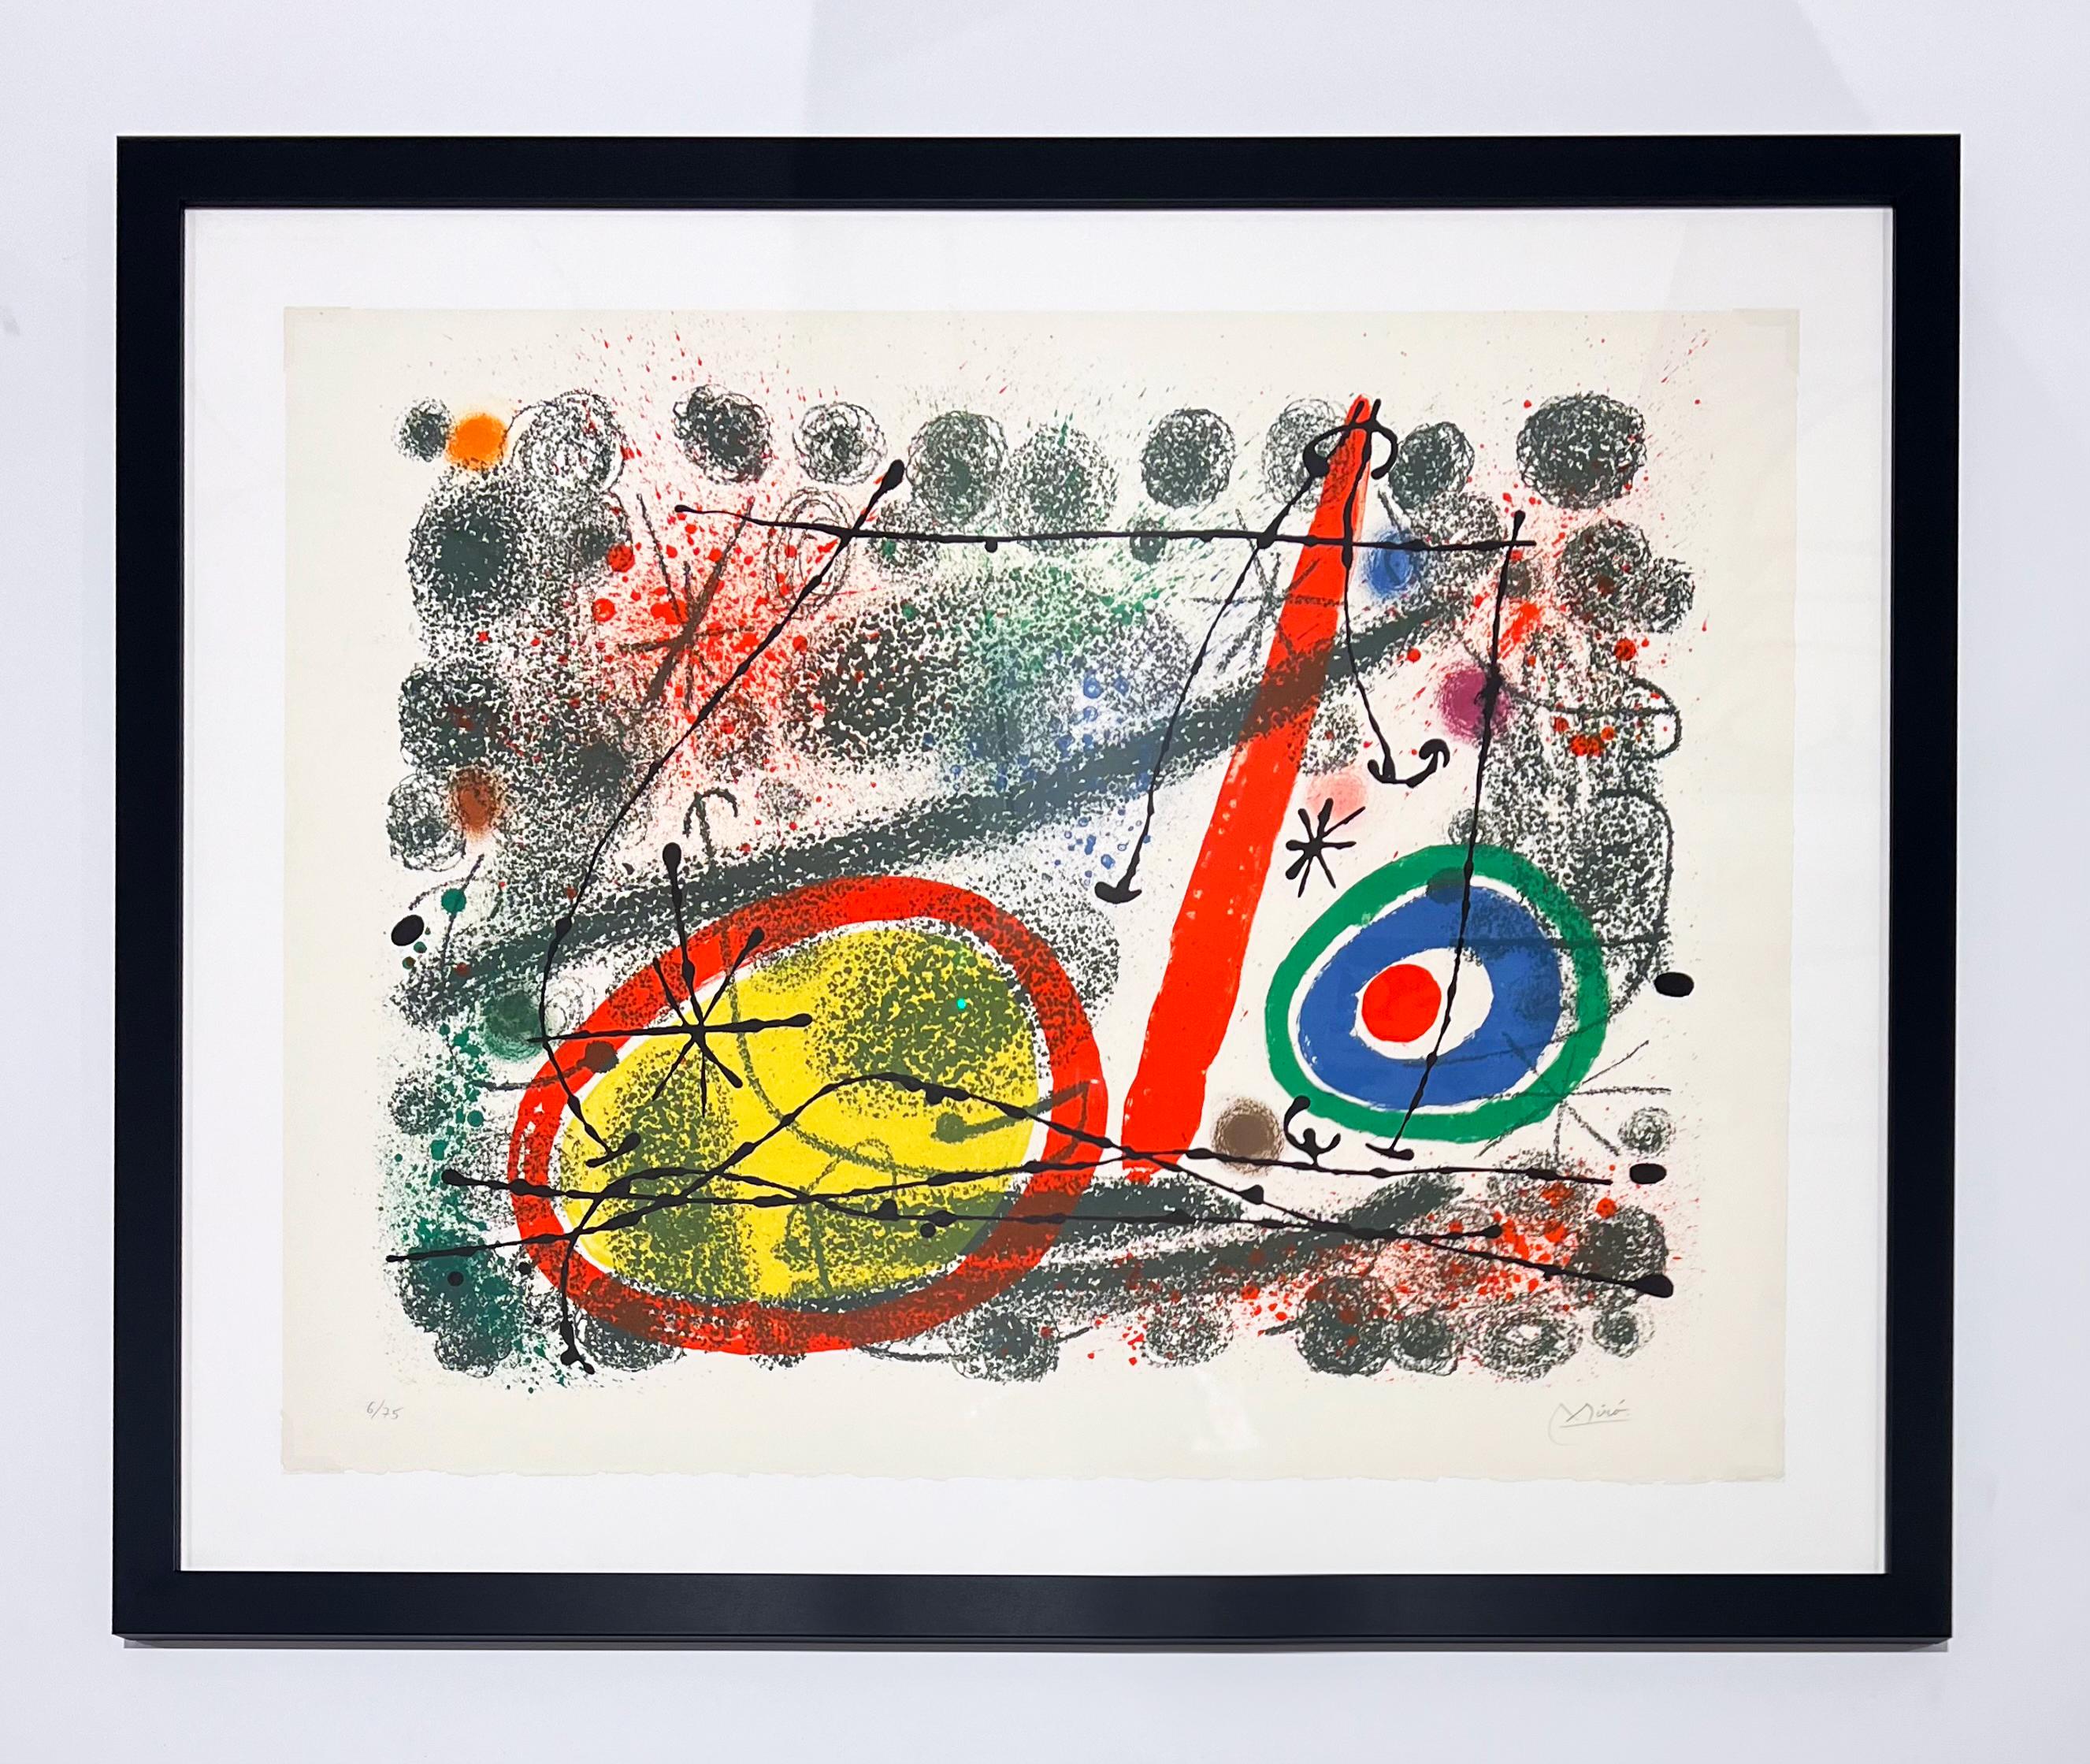 Cartones - Print by Joan Miró